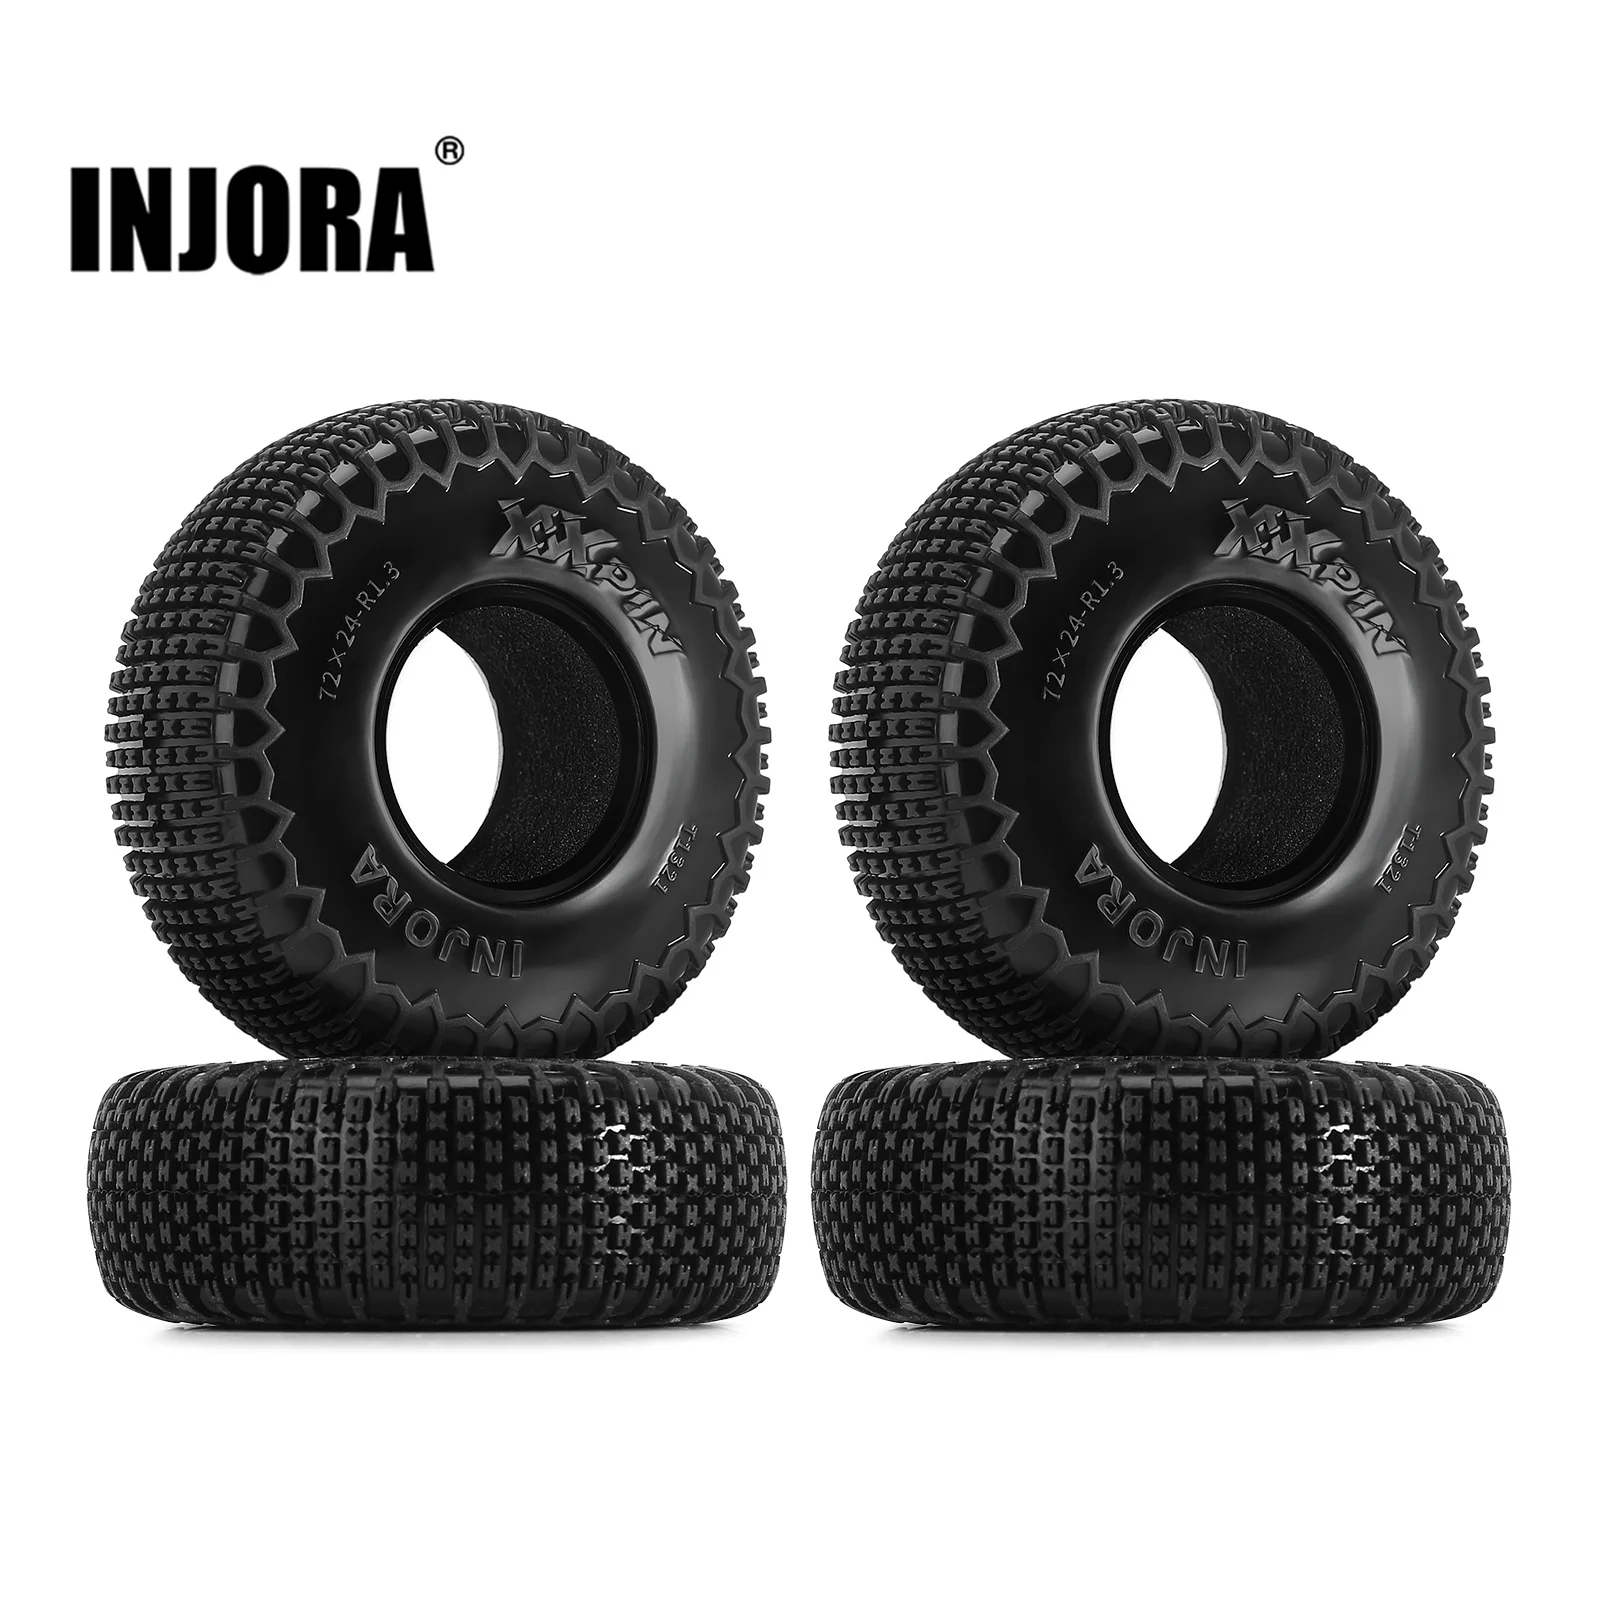 INJORA-1-3-72-24mm-XHX-Pin-Tires-for-1-18-1-24-Micro-Crawler-Upgrade.webp